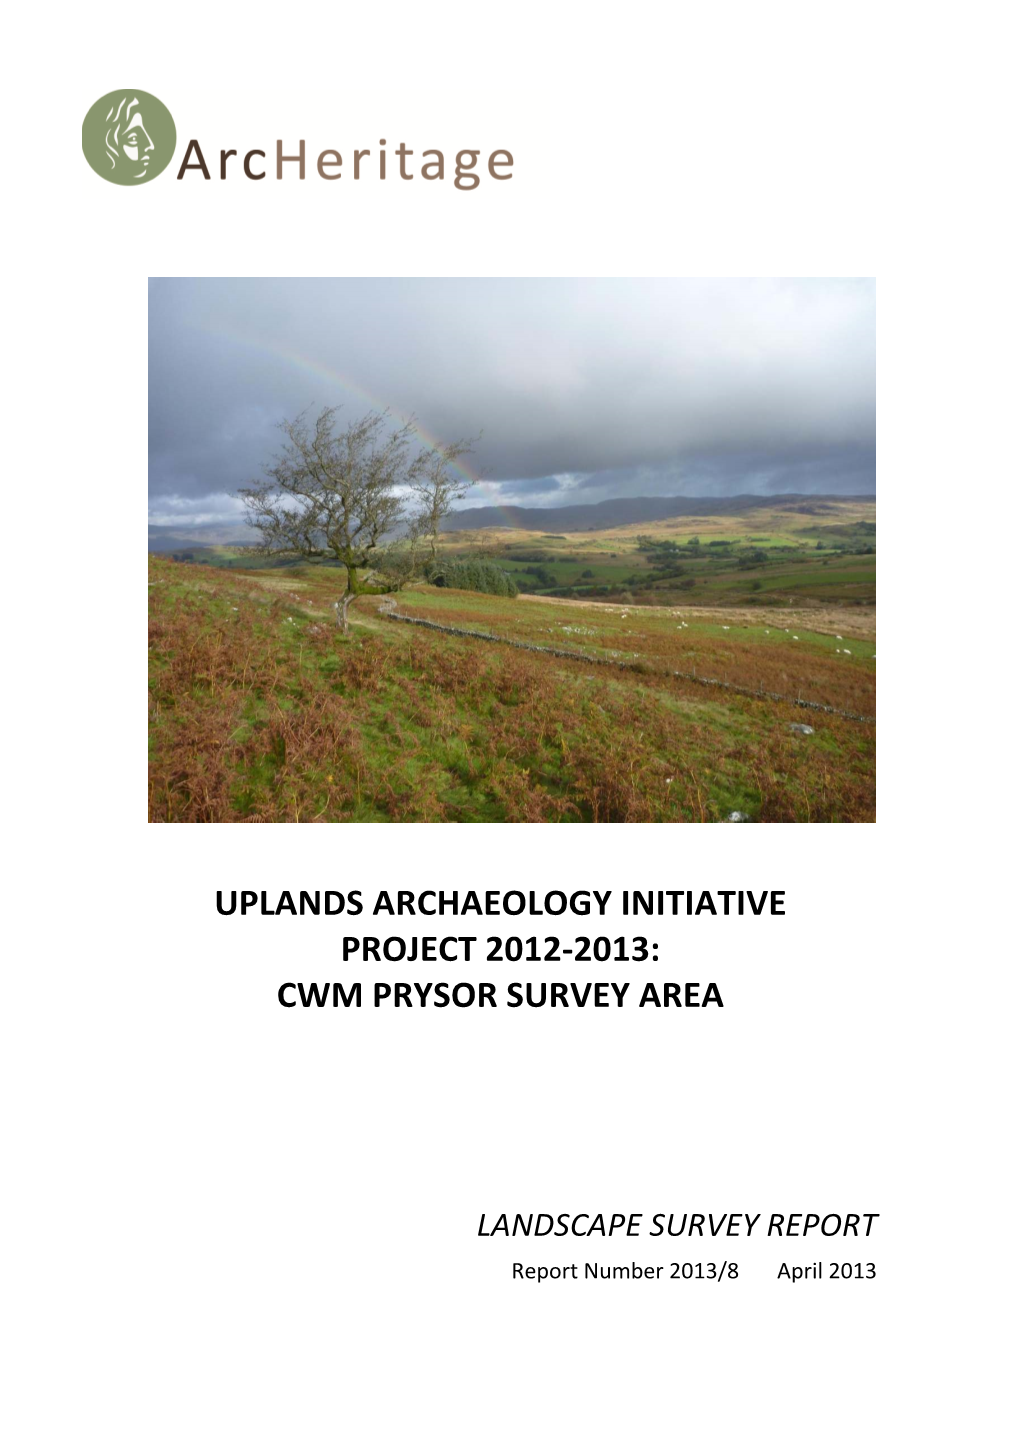 Uplands Archaeology Initiative Project 2012-2013: Cwm Prysor Survey Area